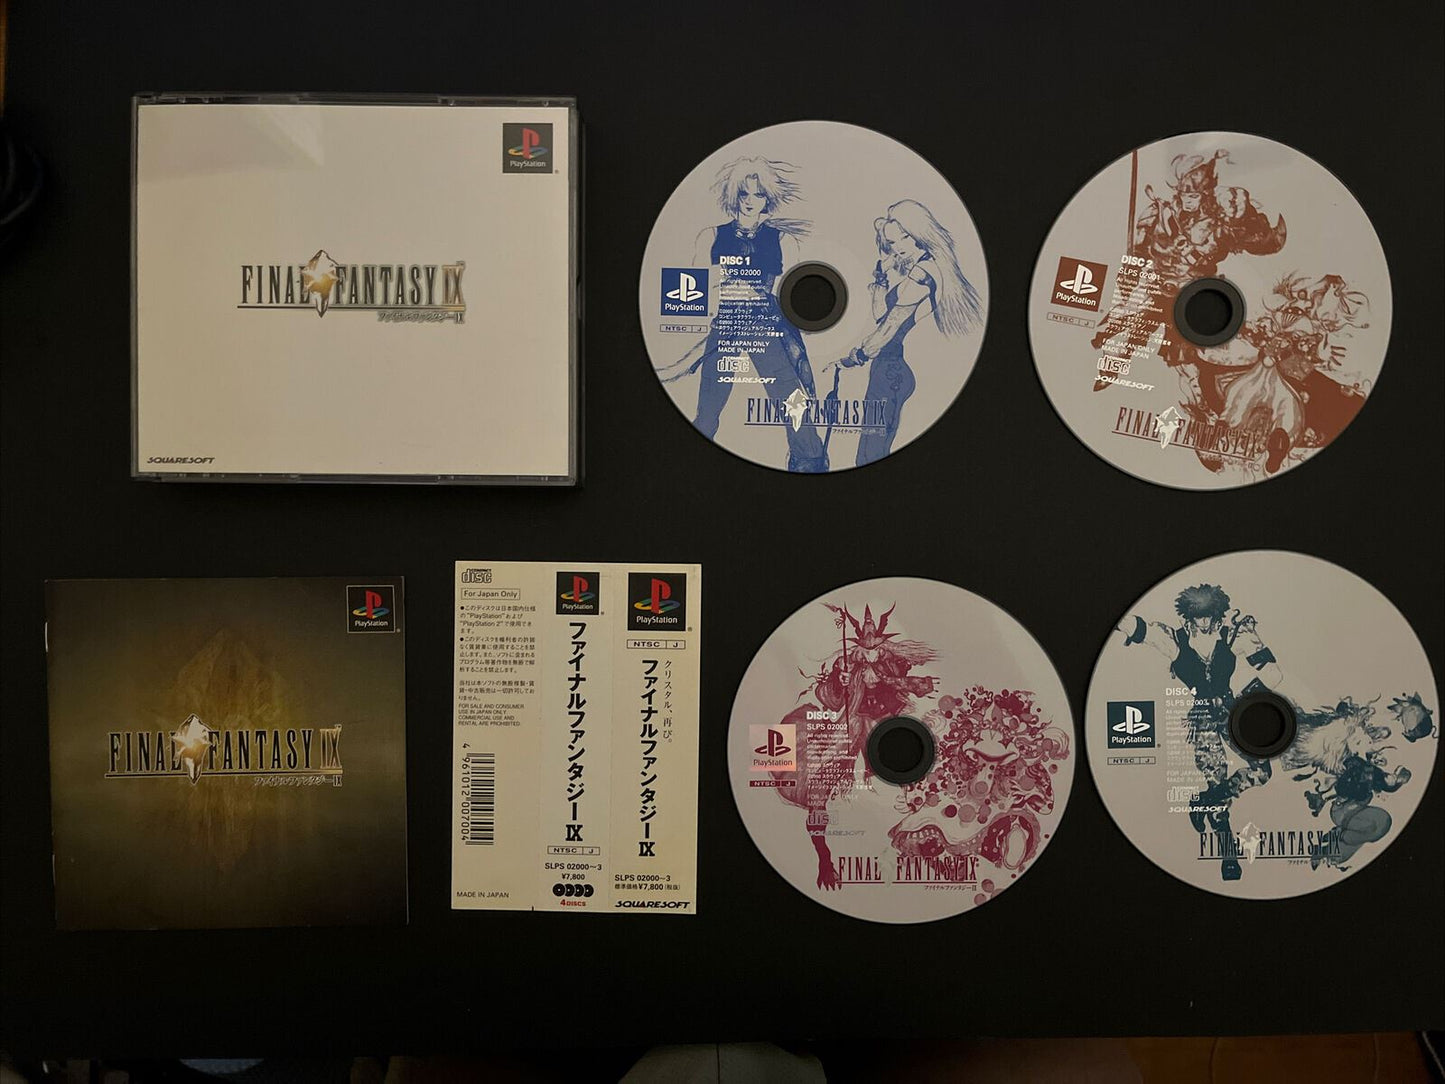 Final Fantasy IX 9 - PlayStation PS1 NTSC-J Japan FF9 RPG Game Complete